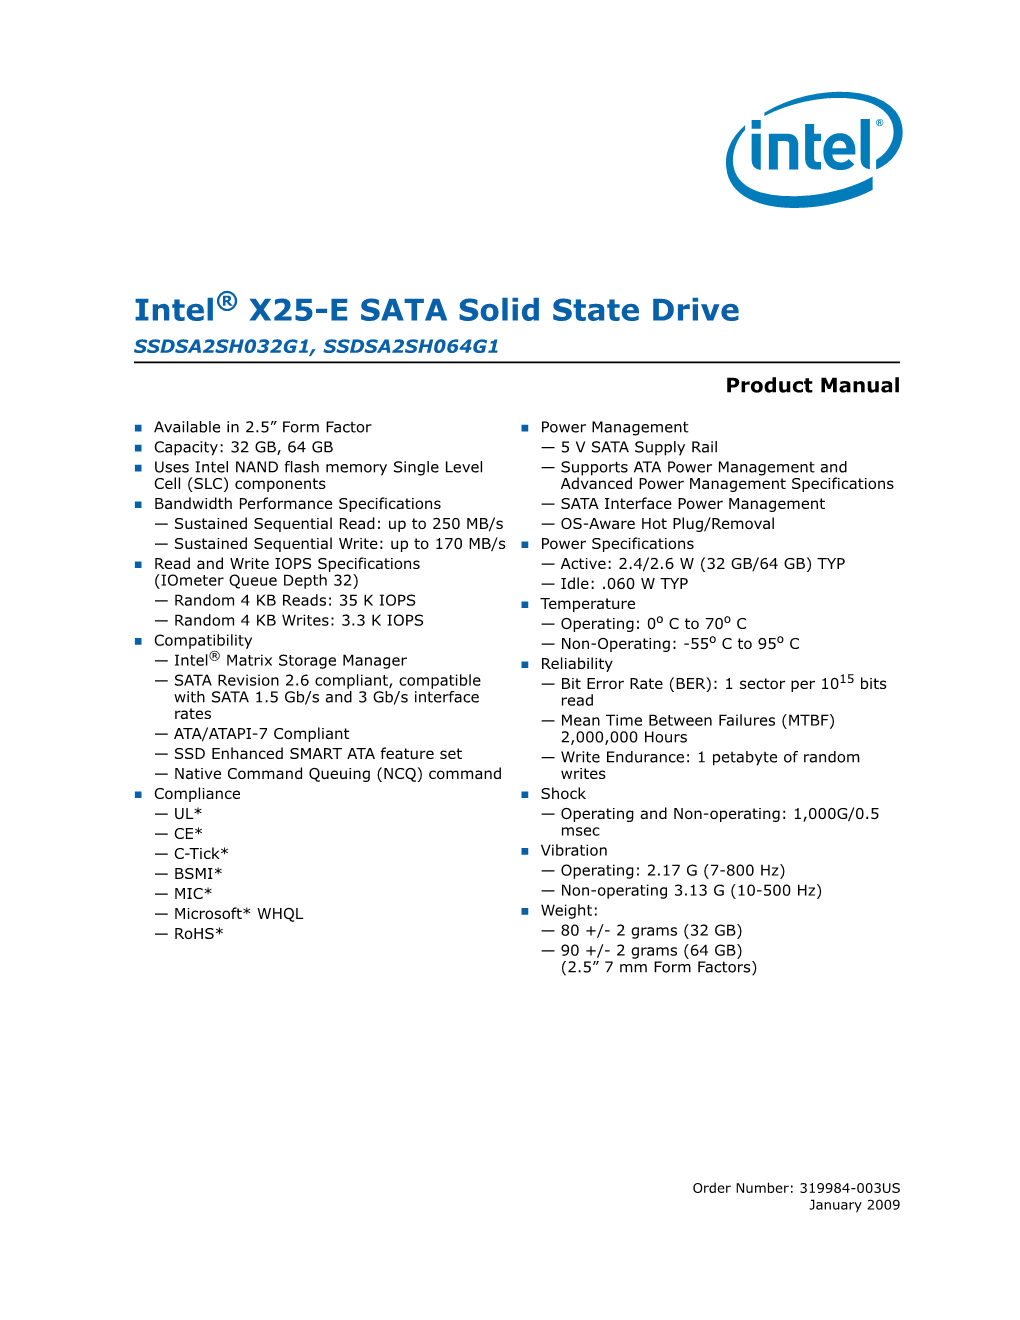 X25-E SATA Solid State Drive SSDSA2SH032G1, SSDSA2SH064G1 Product Manual